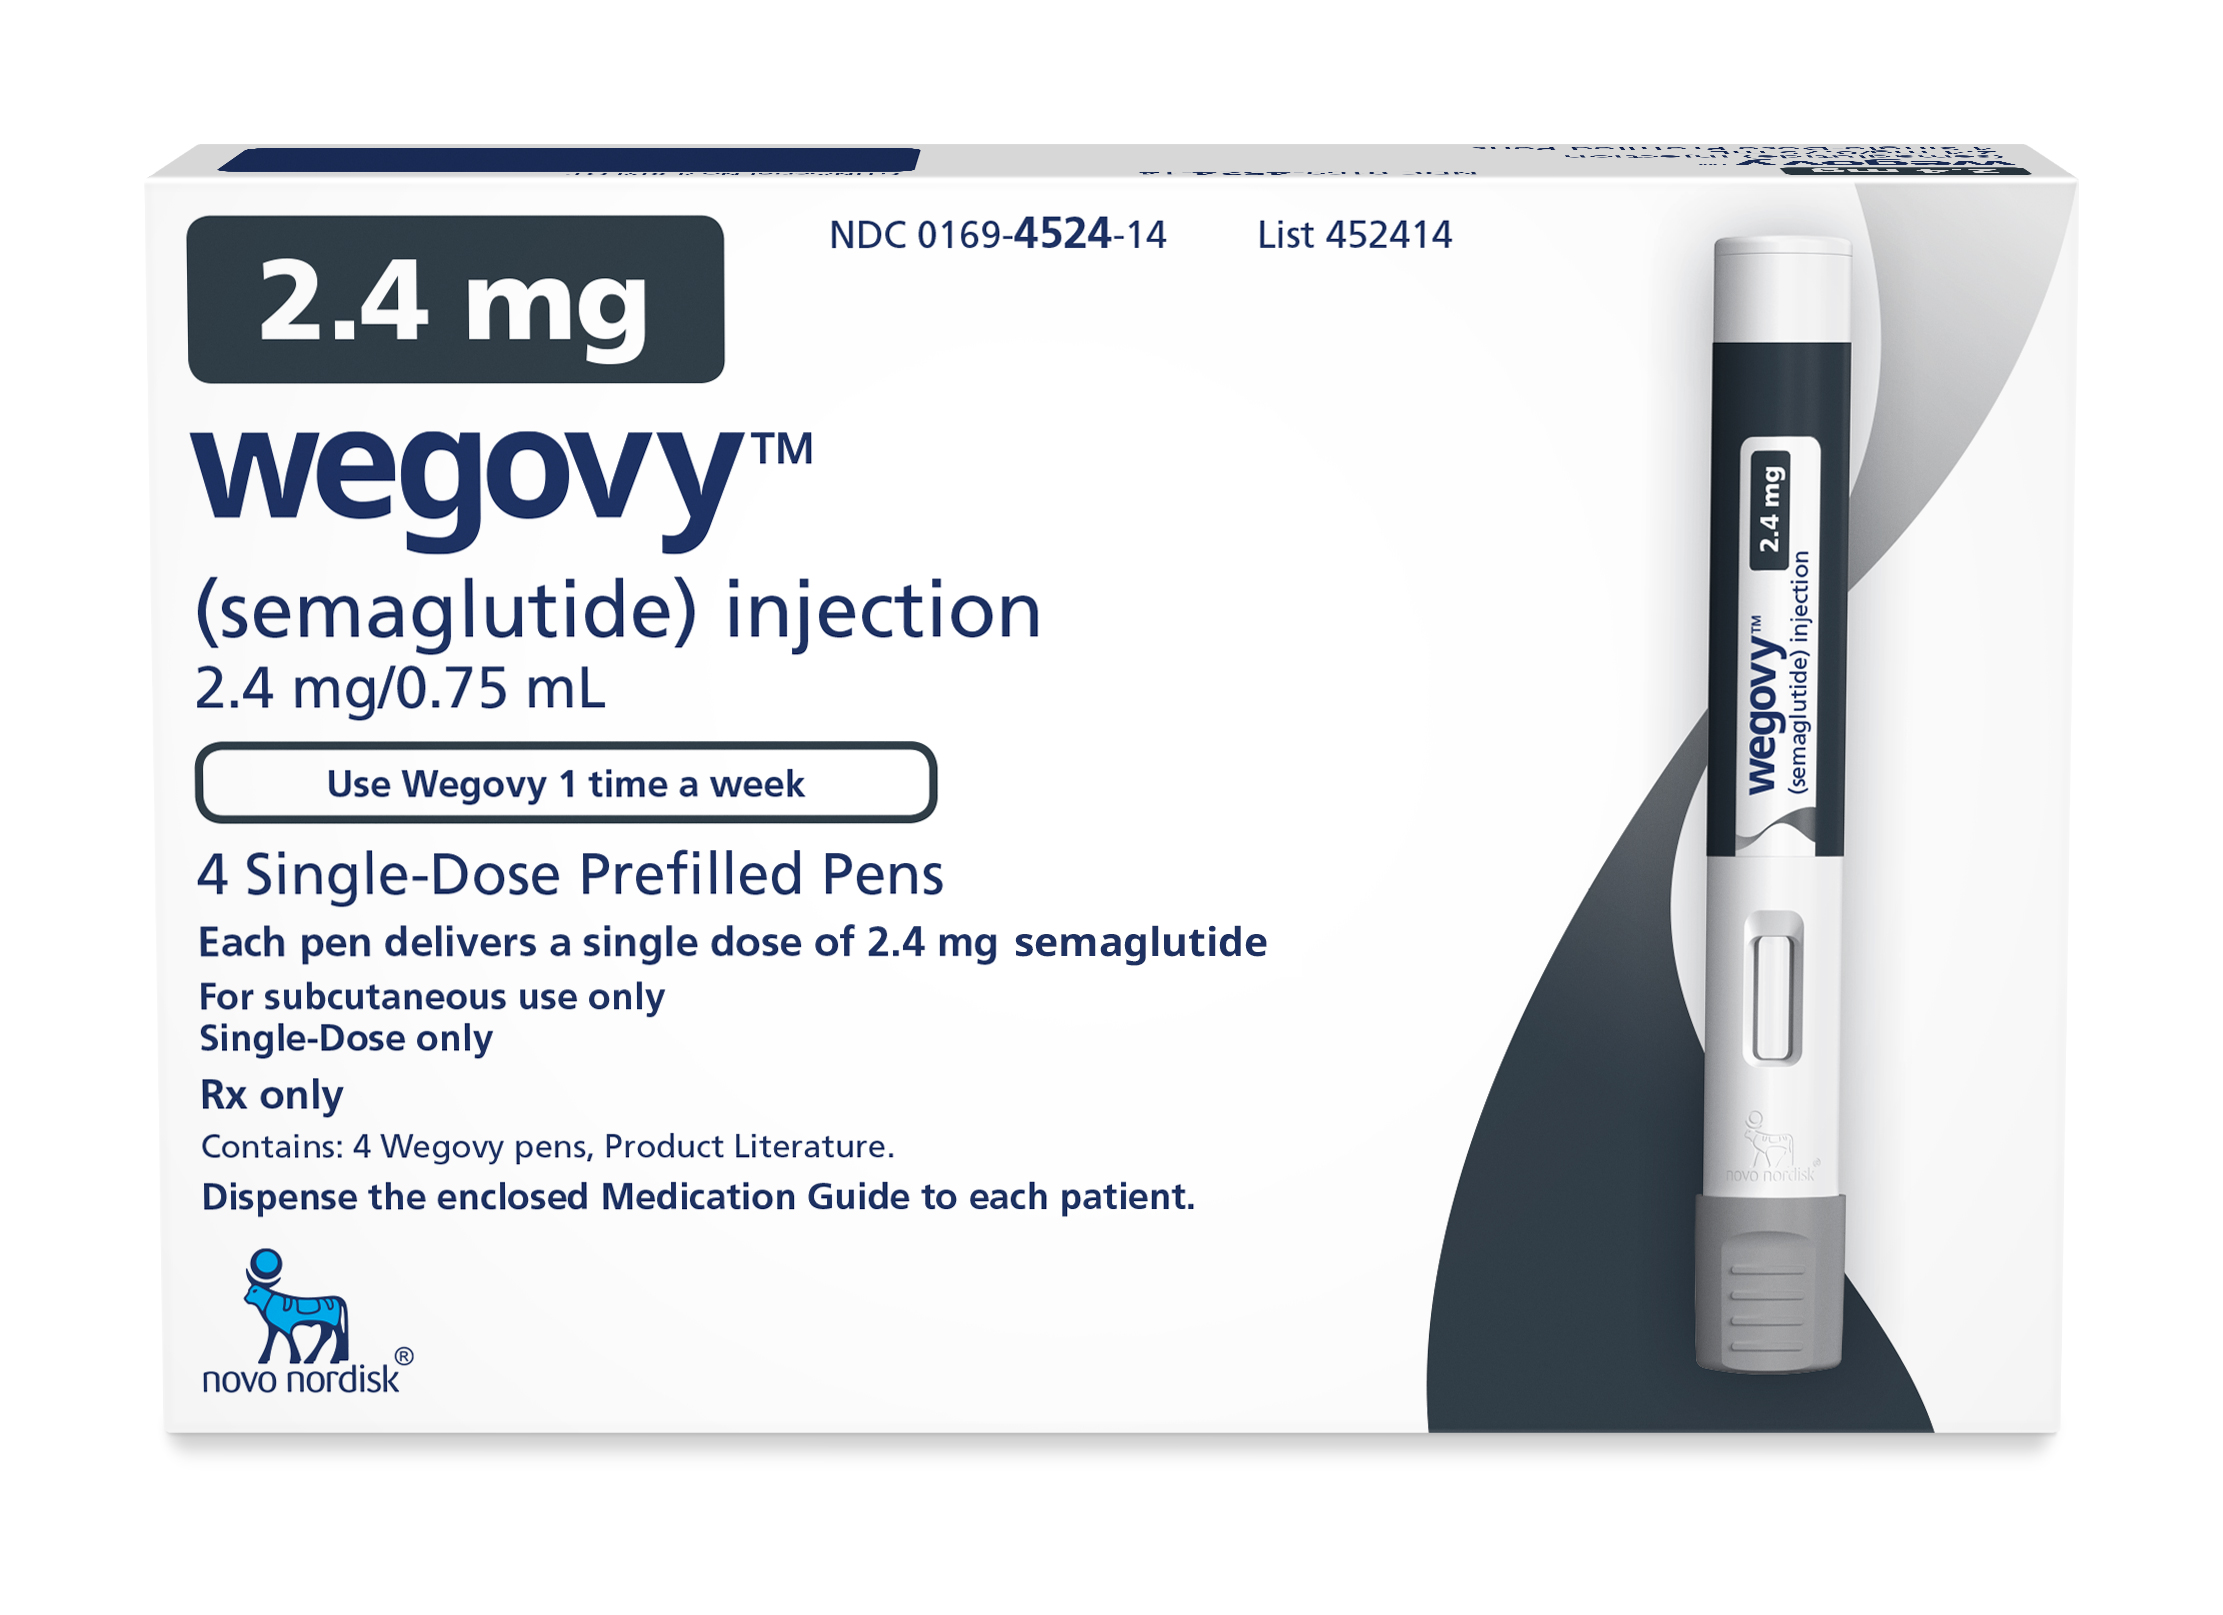 Wegovy™ (semaglutide) injection 2.4 mg product photos